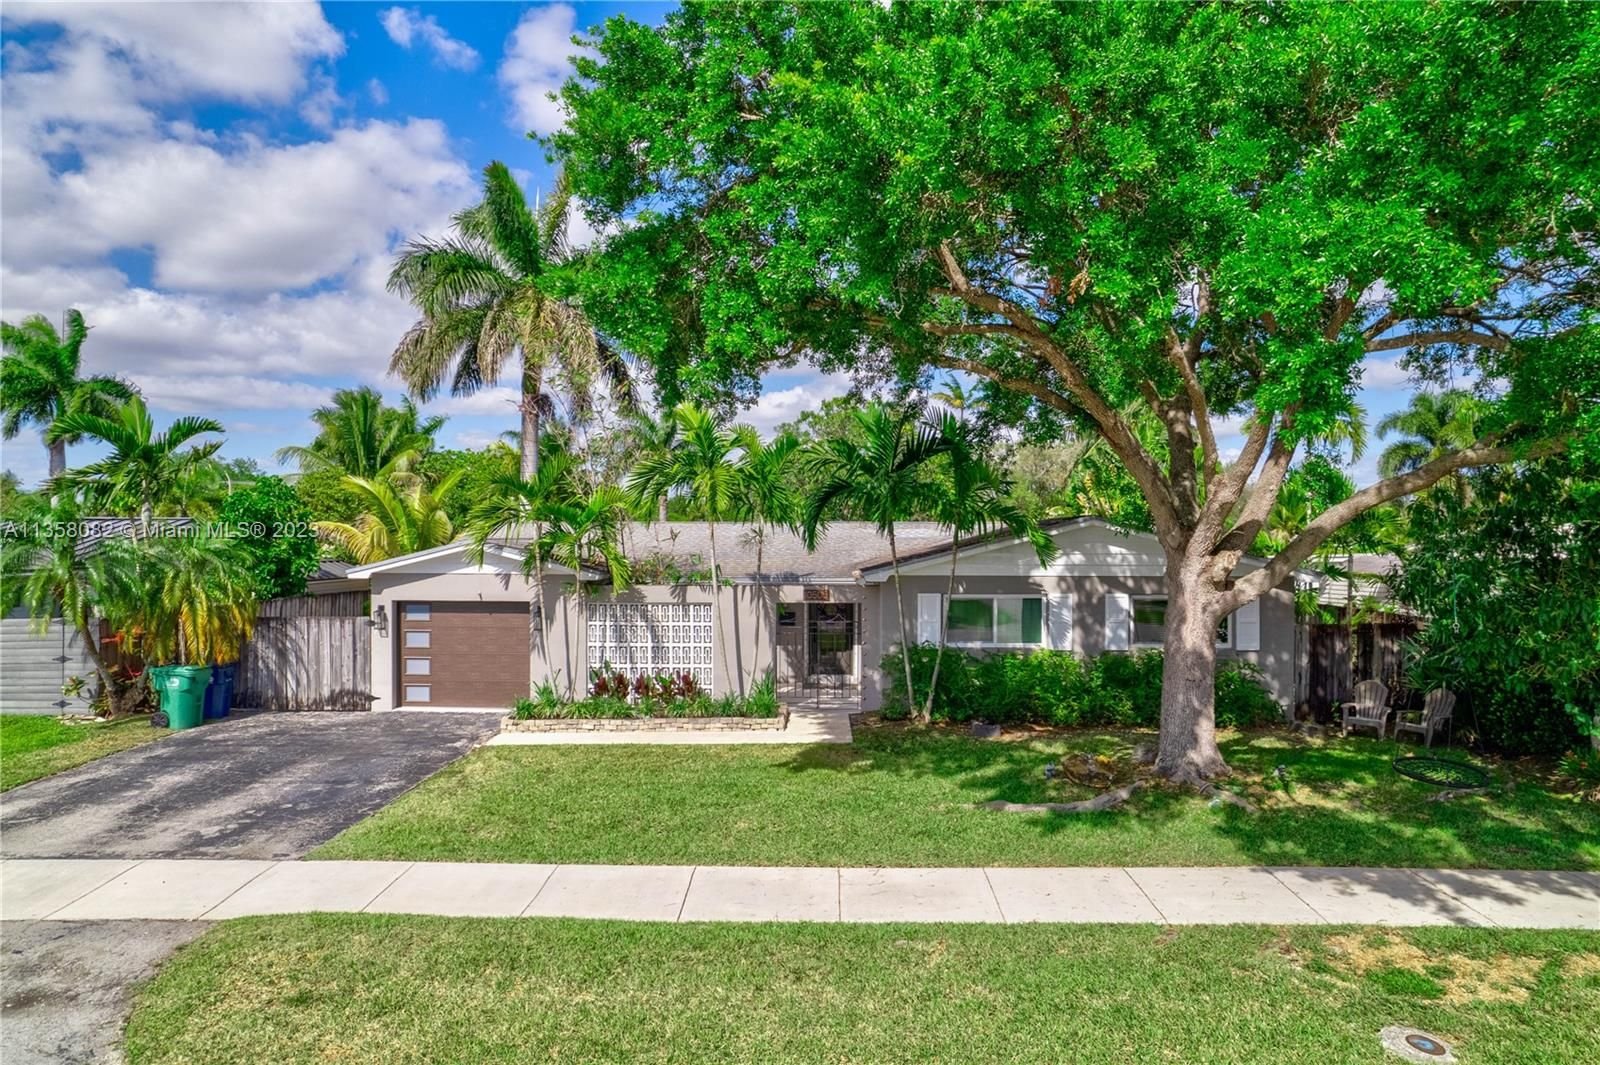 Real estate property located at 10505 109th St, Miami-Dade County, Miami, FL